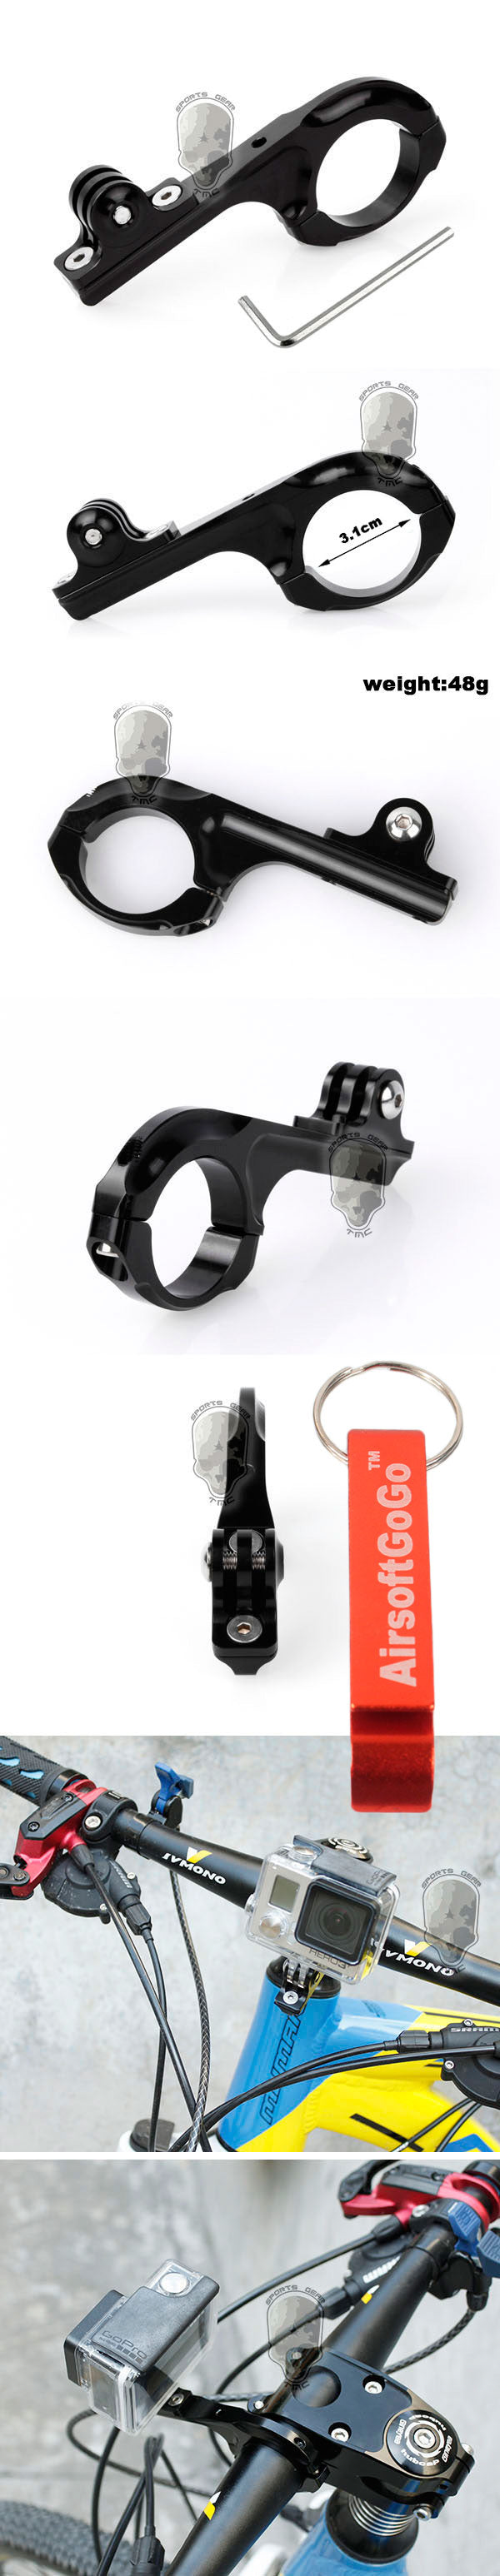 Handlebar for GoPro Hero 2/3+ (31.8mm) Bicycle/Motorcycle Aluminum Handle Mount Adapter (Black)